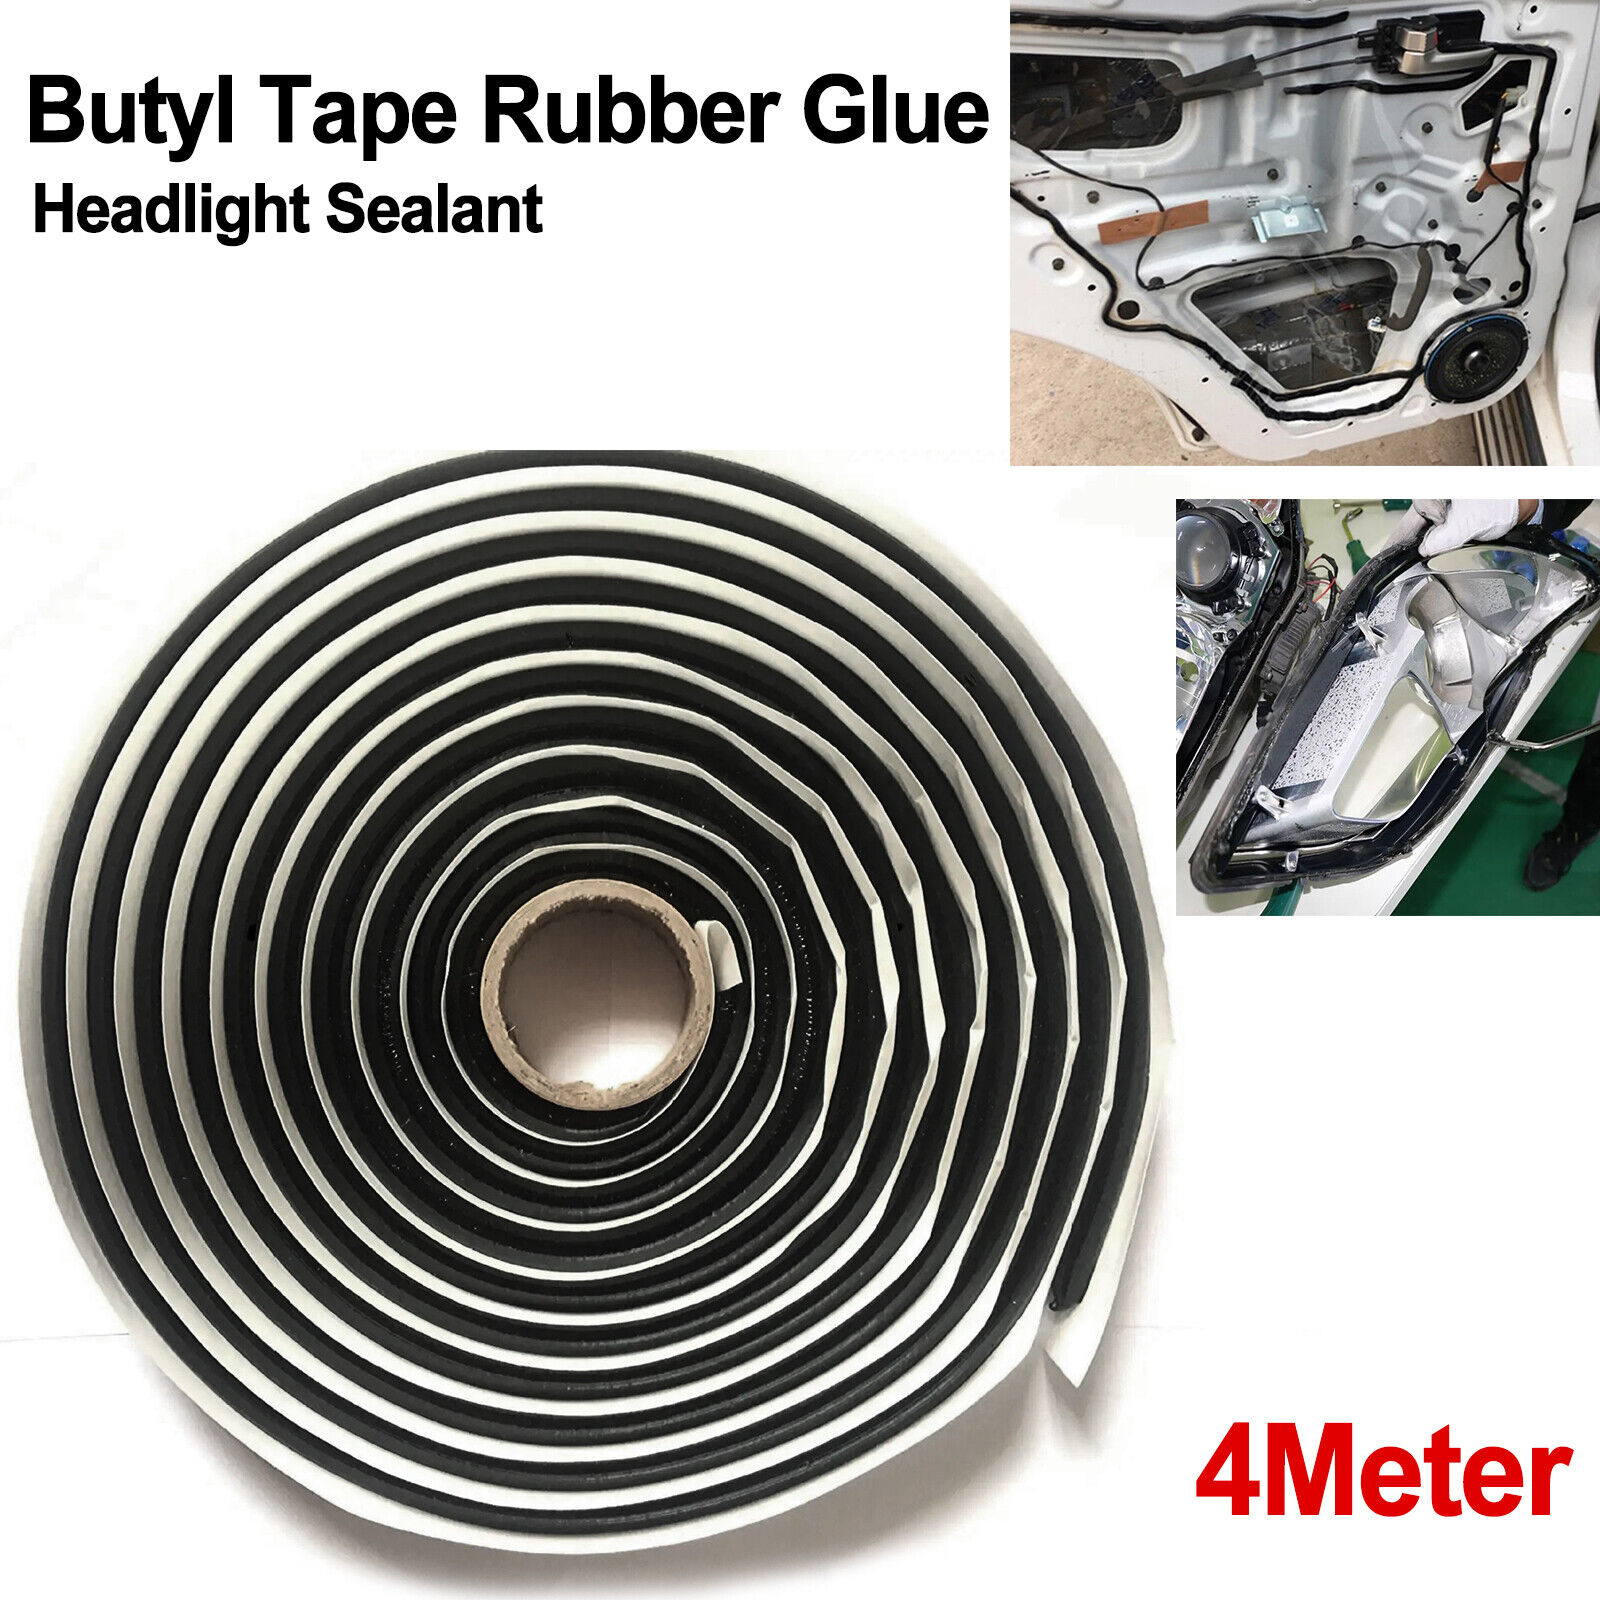 4M Butyl Tape Rubber Glue Headlight Sealant Trailer RV Retrofit Reseal Headlamp/